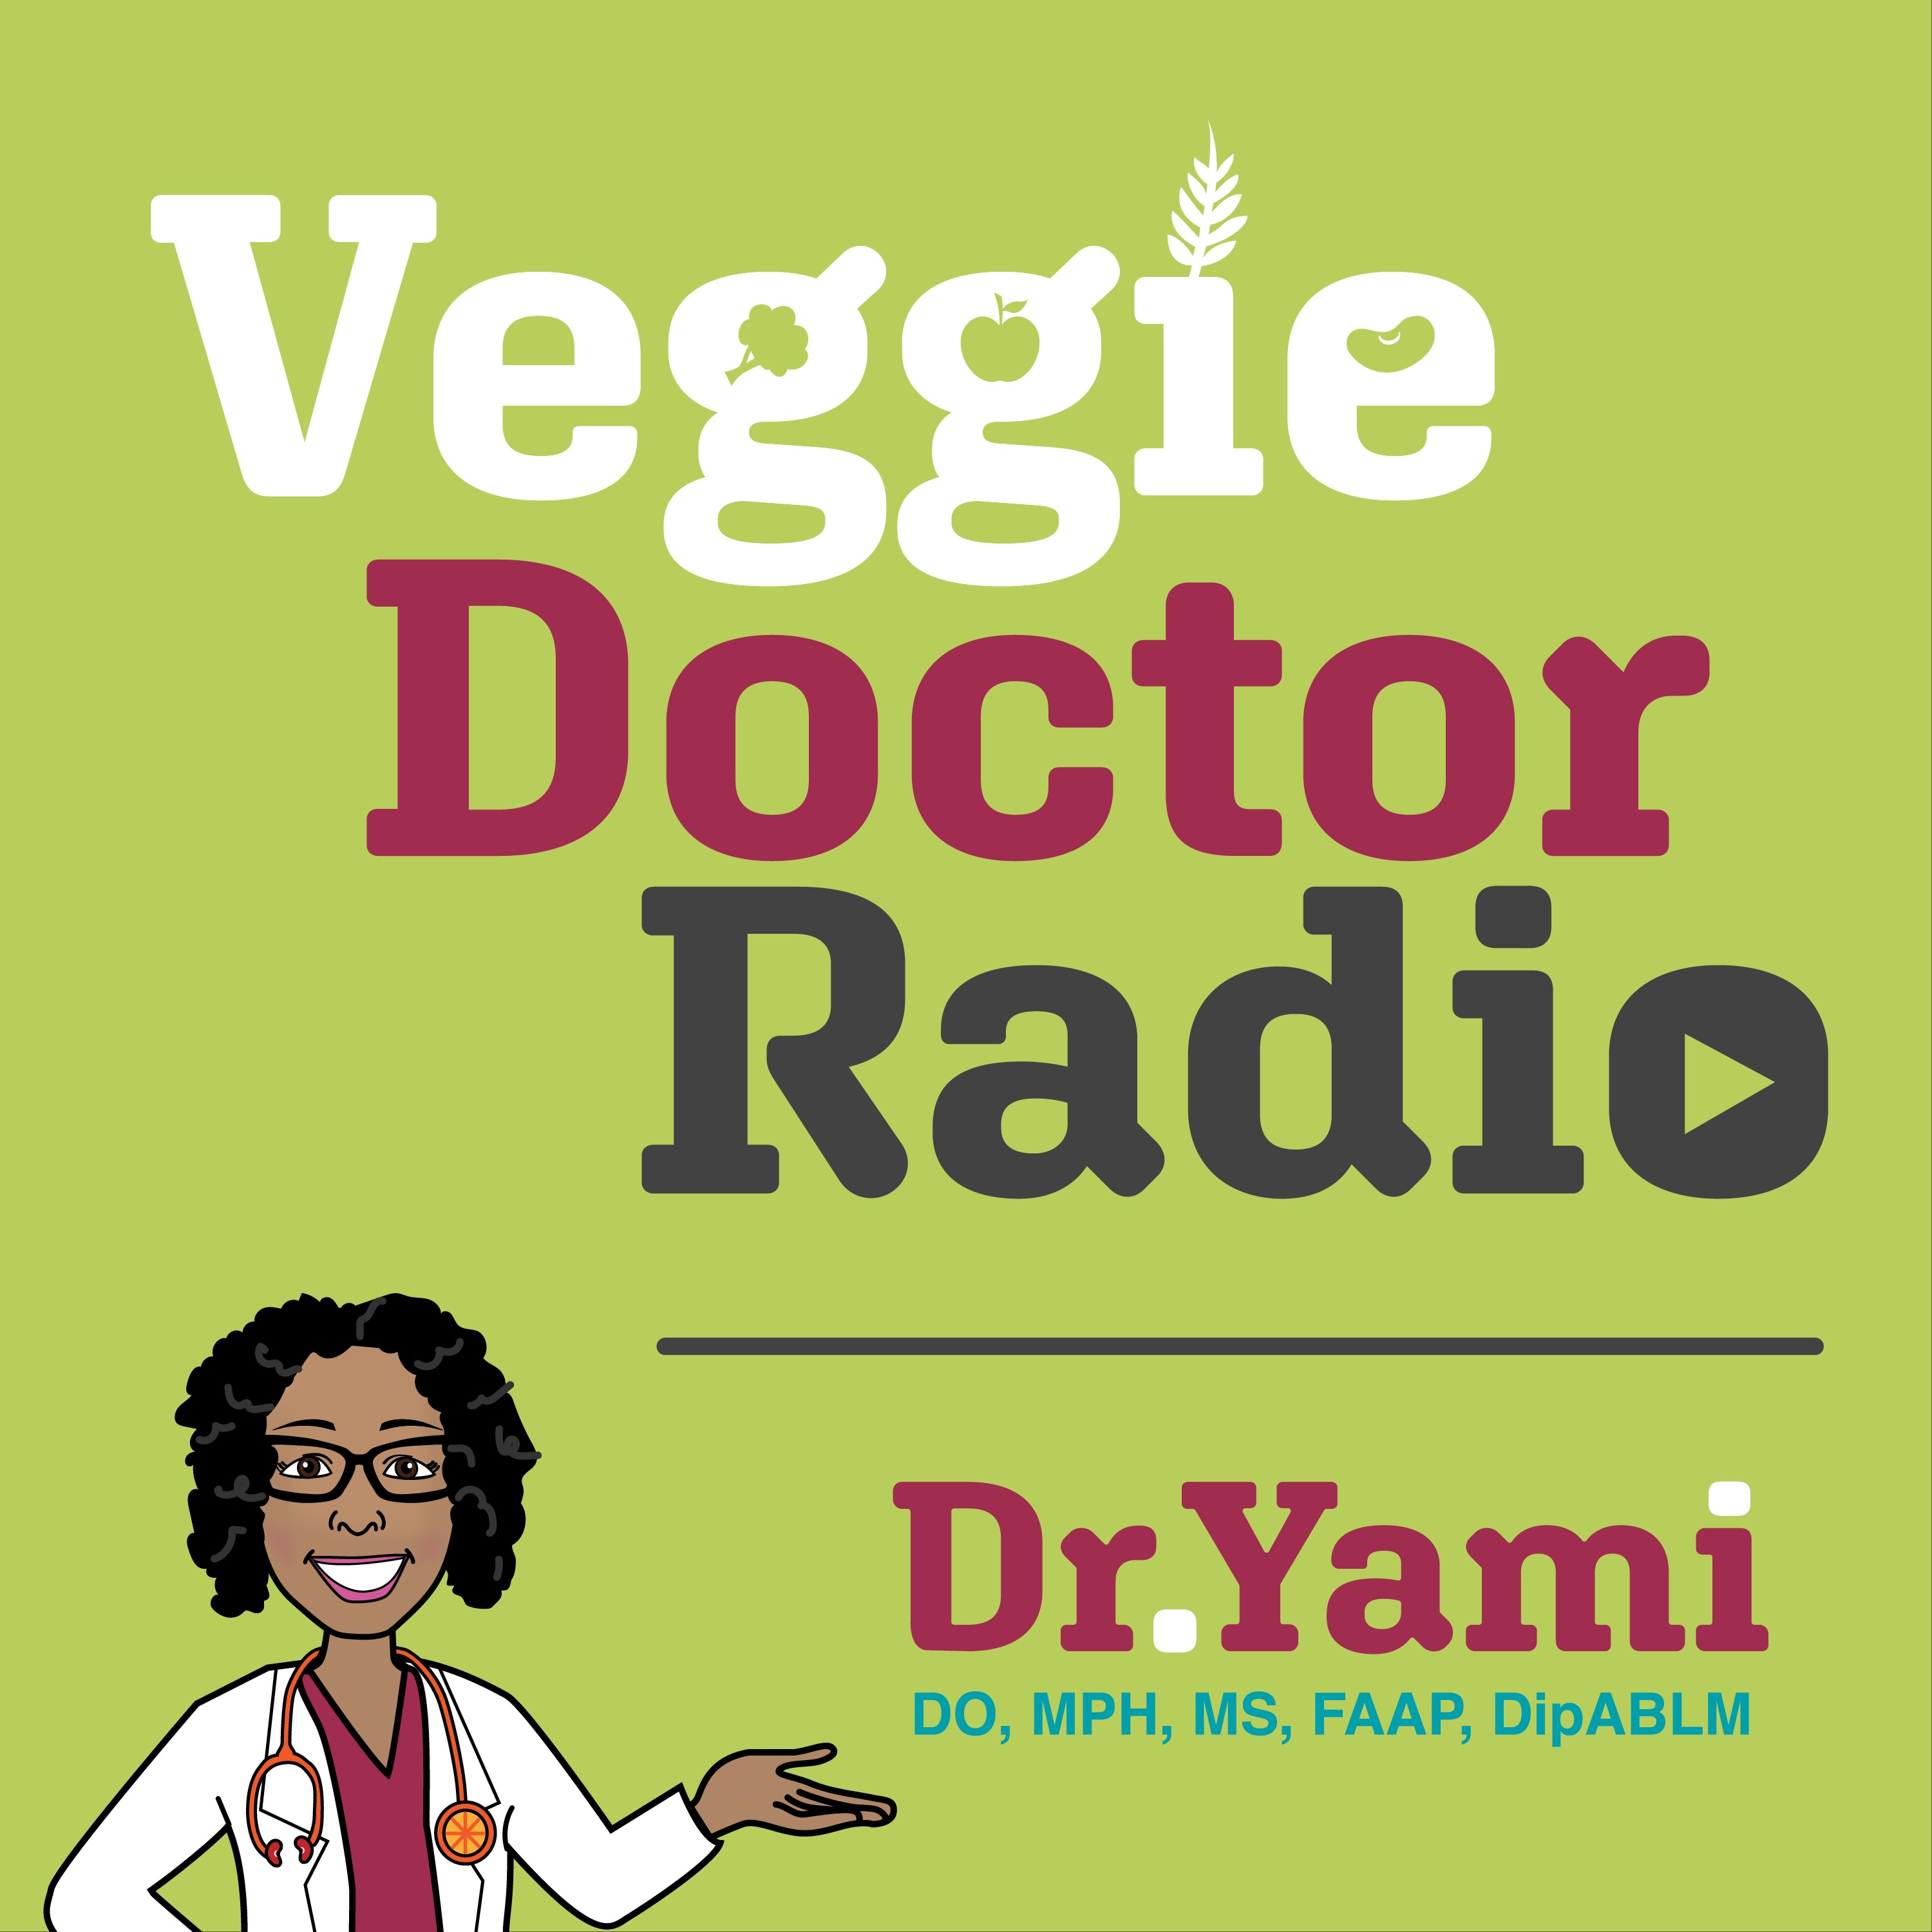 208: How the bullseye of change will help you build healthy habits with Jenn Trepeck (Veggie Doctor Radio)